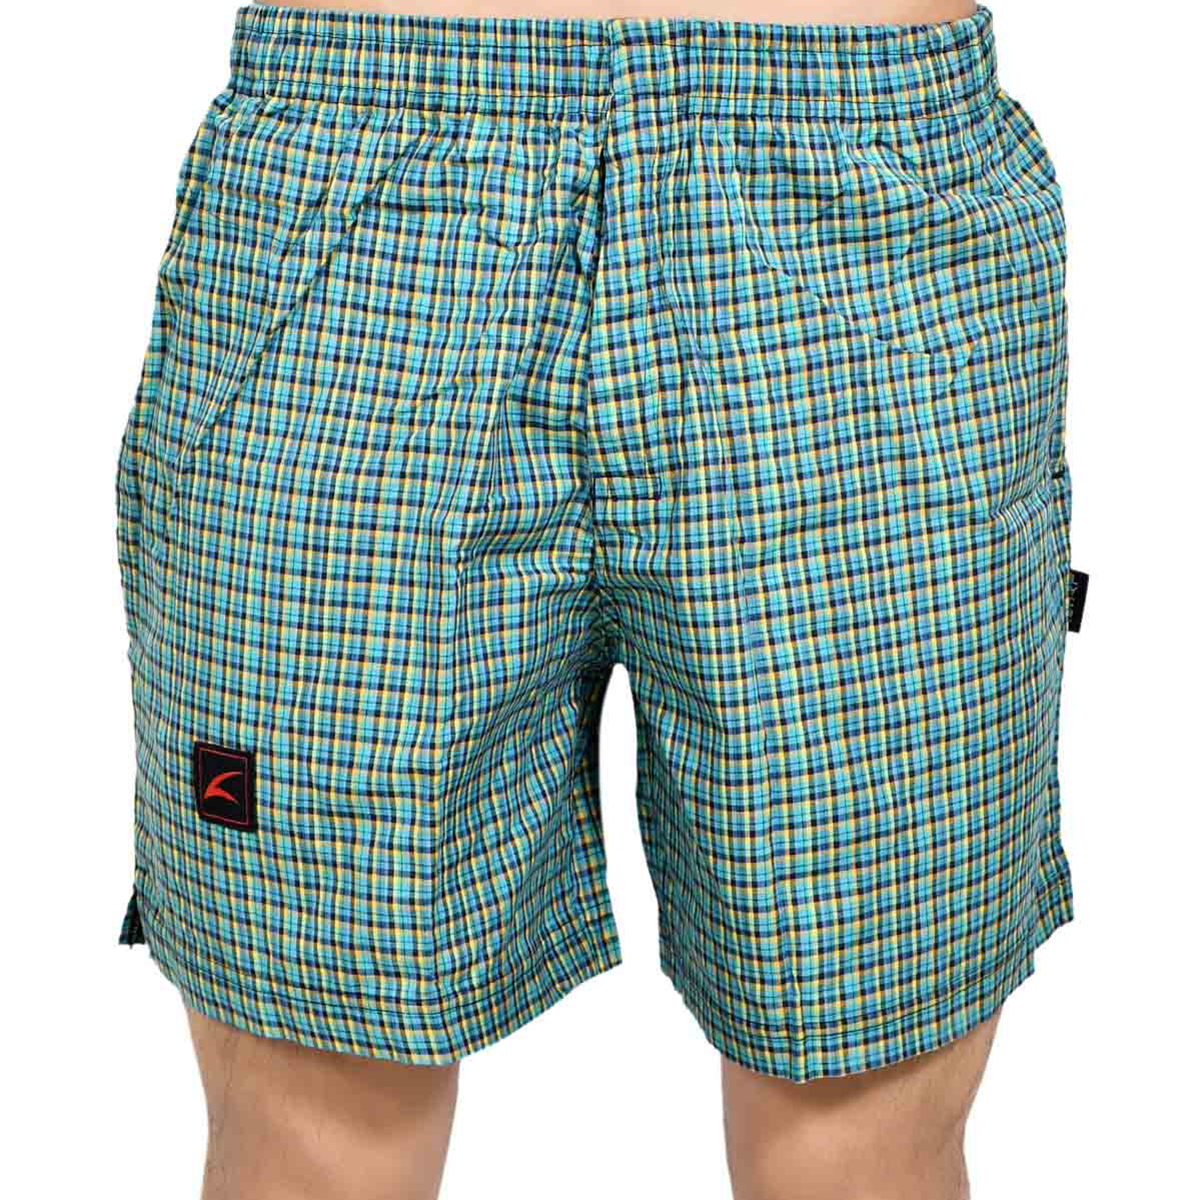 Men's Premium Cotton Boxer Shorts - Stylish and Breathable